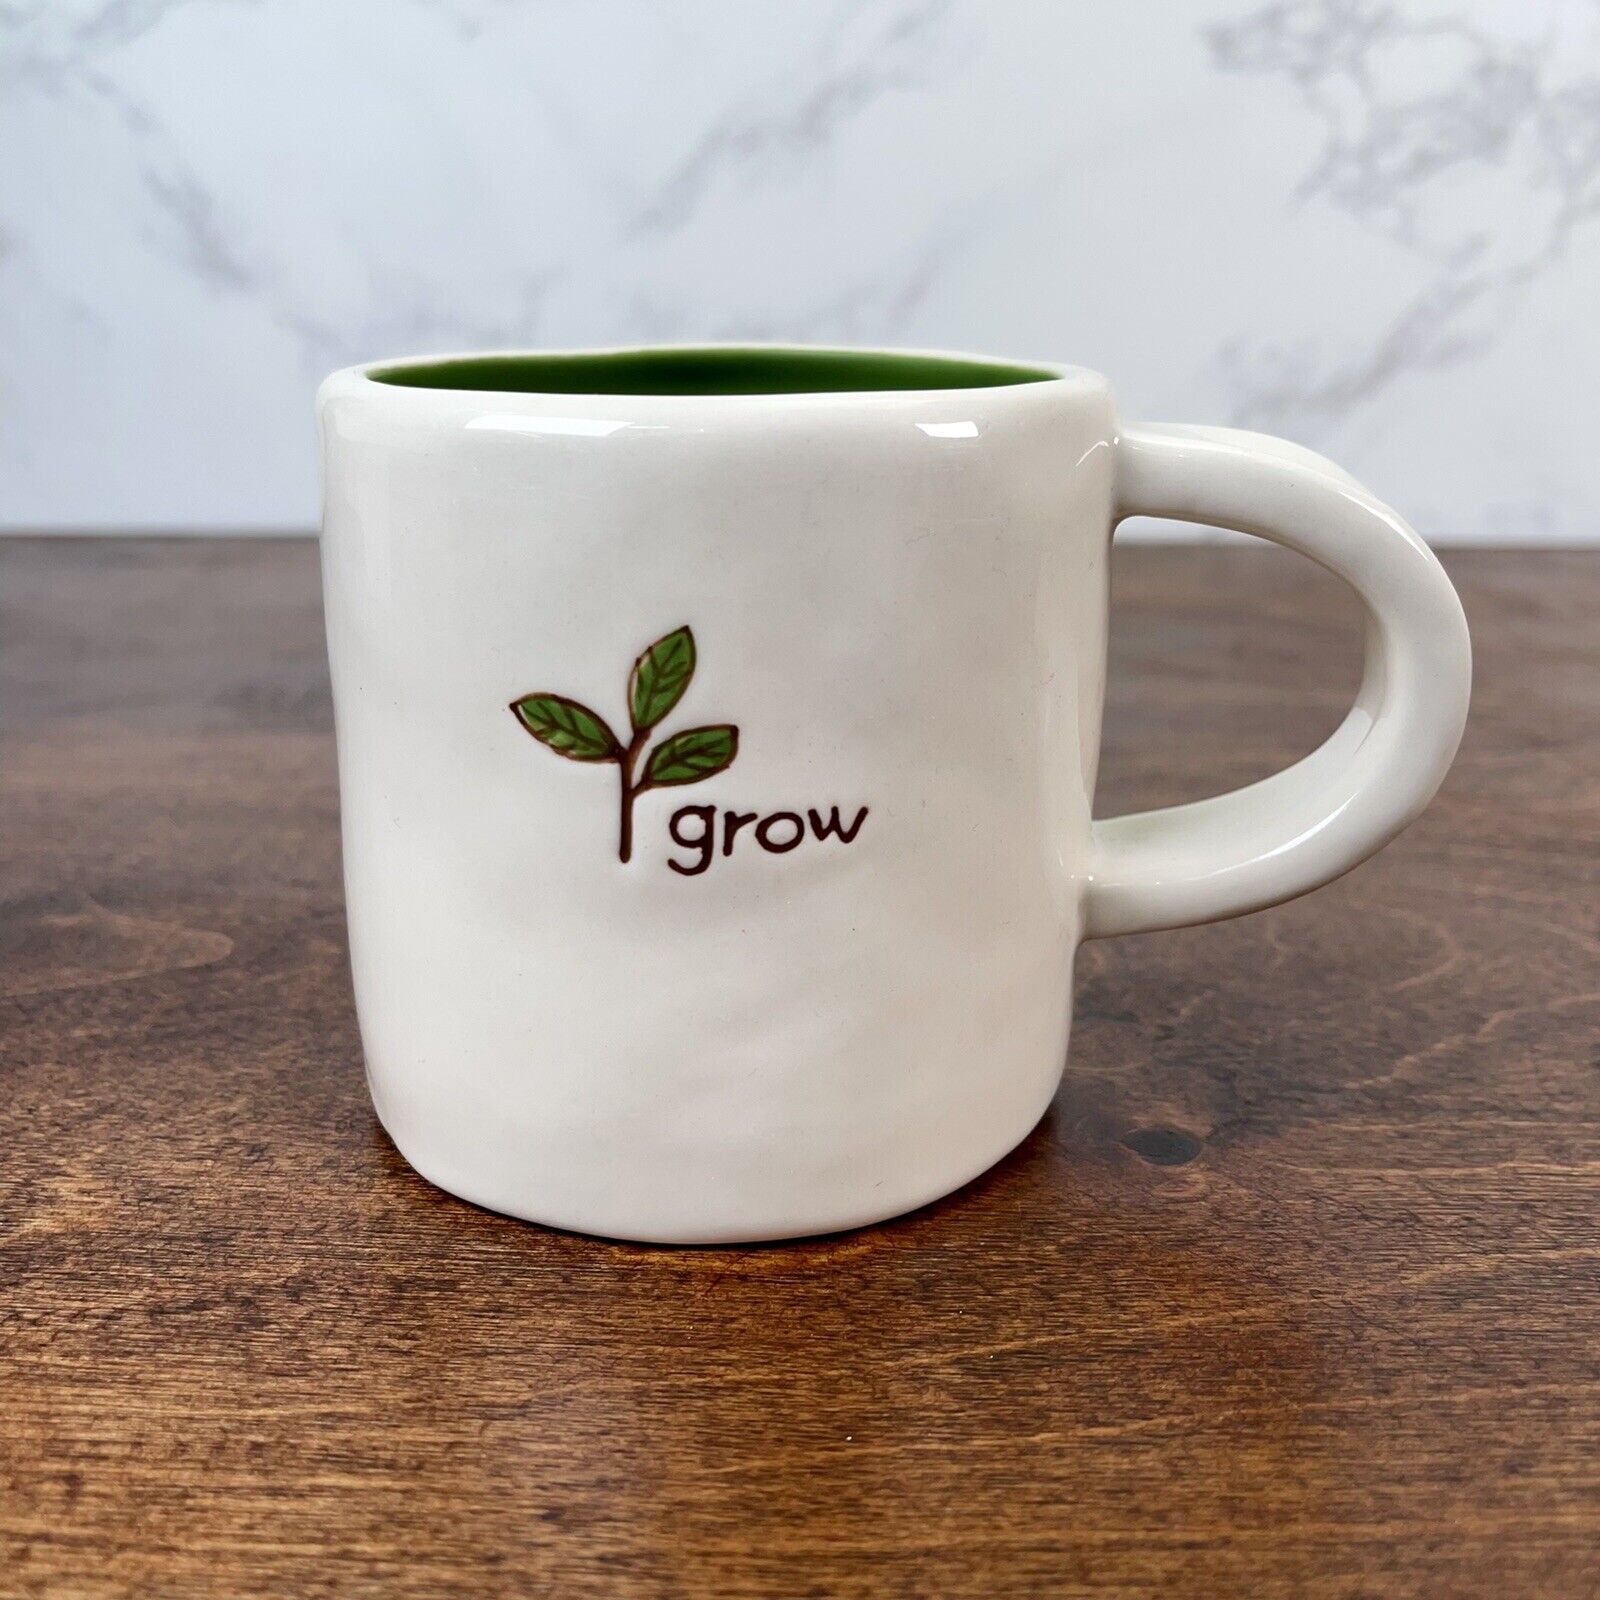 Starbucks Grow Coffee Mug 10 oz Hand Painted Green Leaves 2008 Impressed 